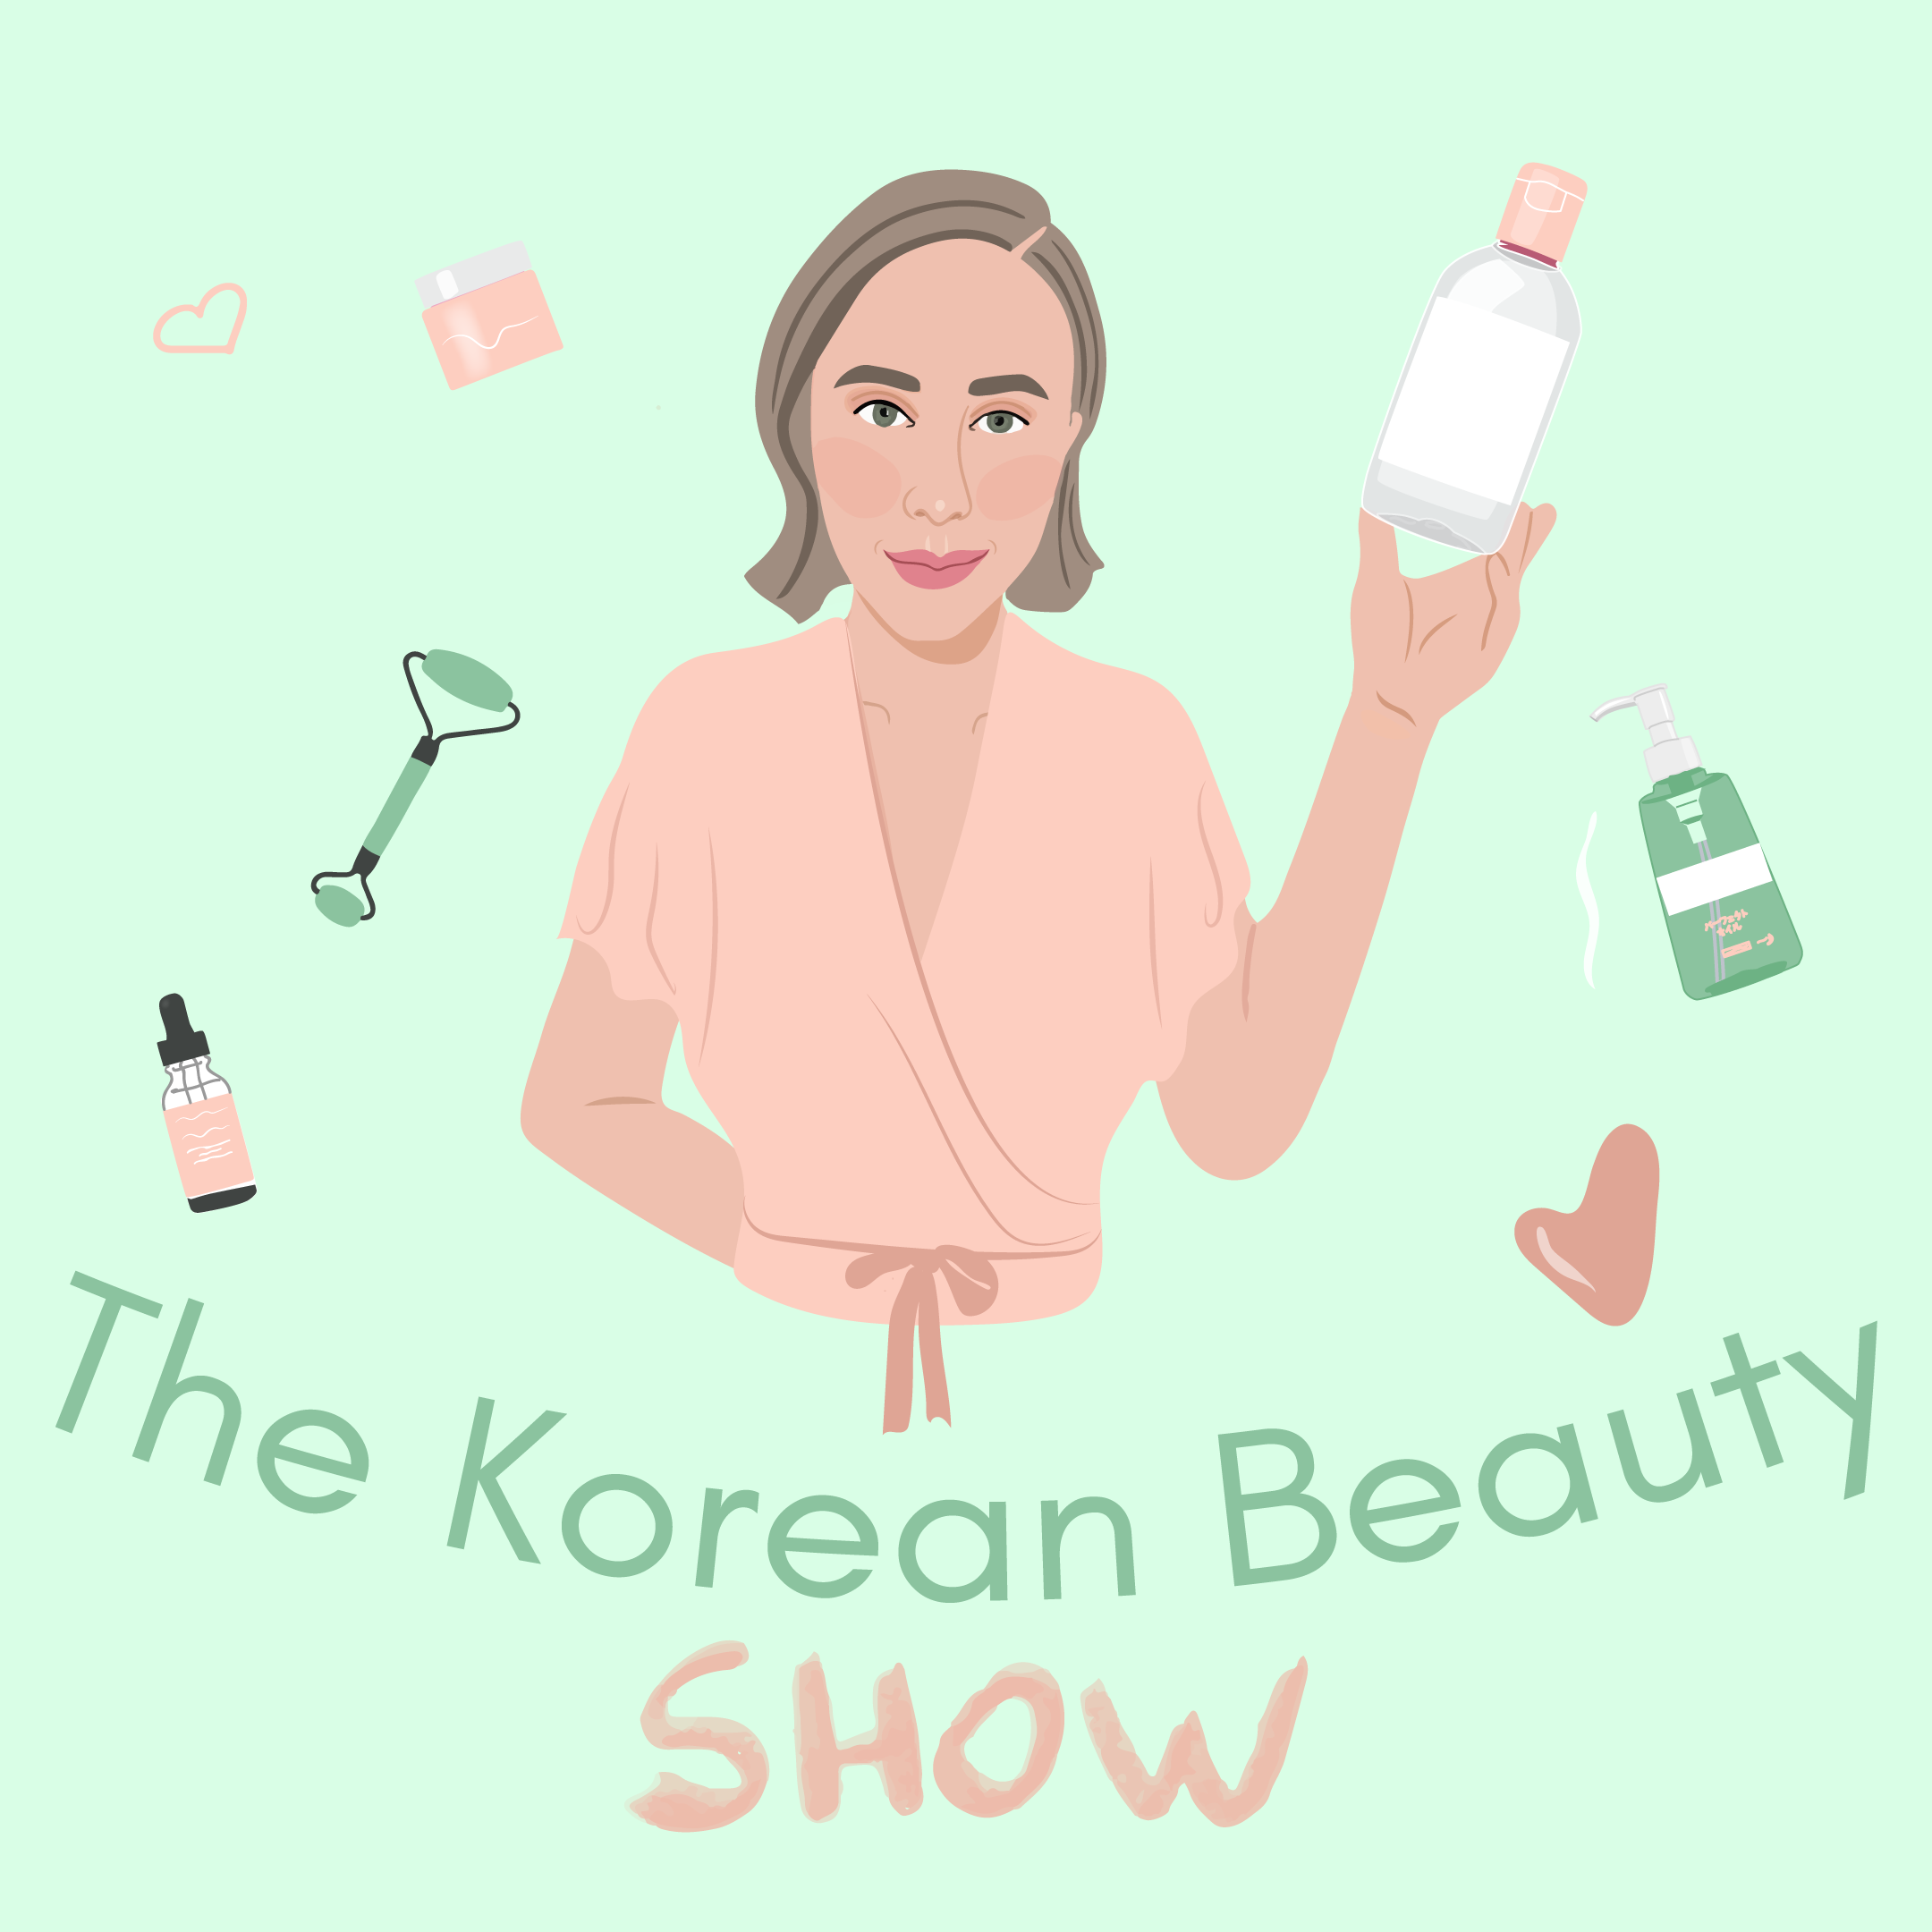 How to Break Into the Korean Beauty Market